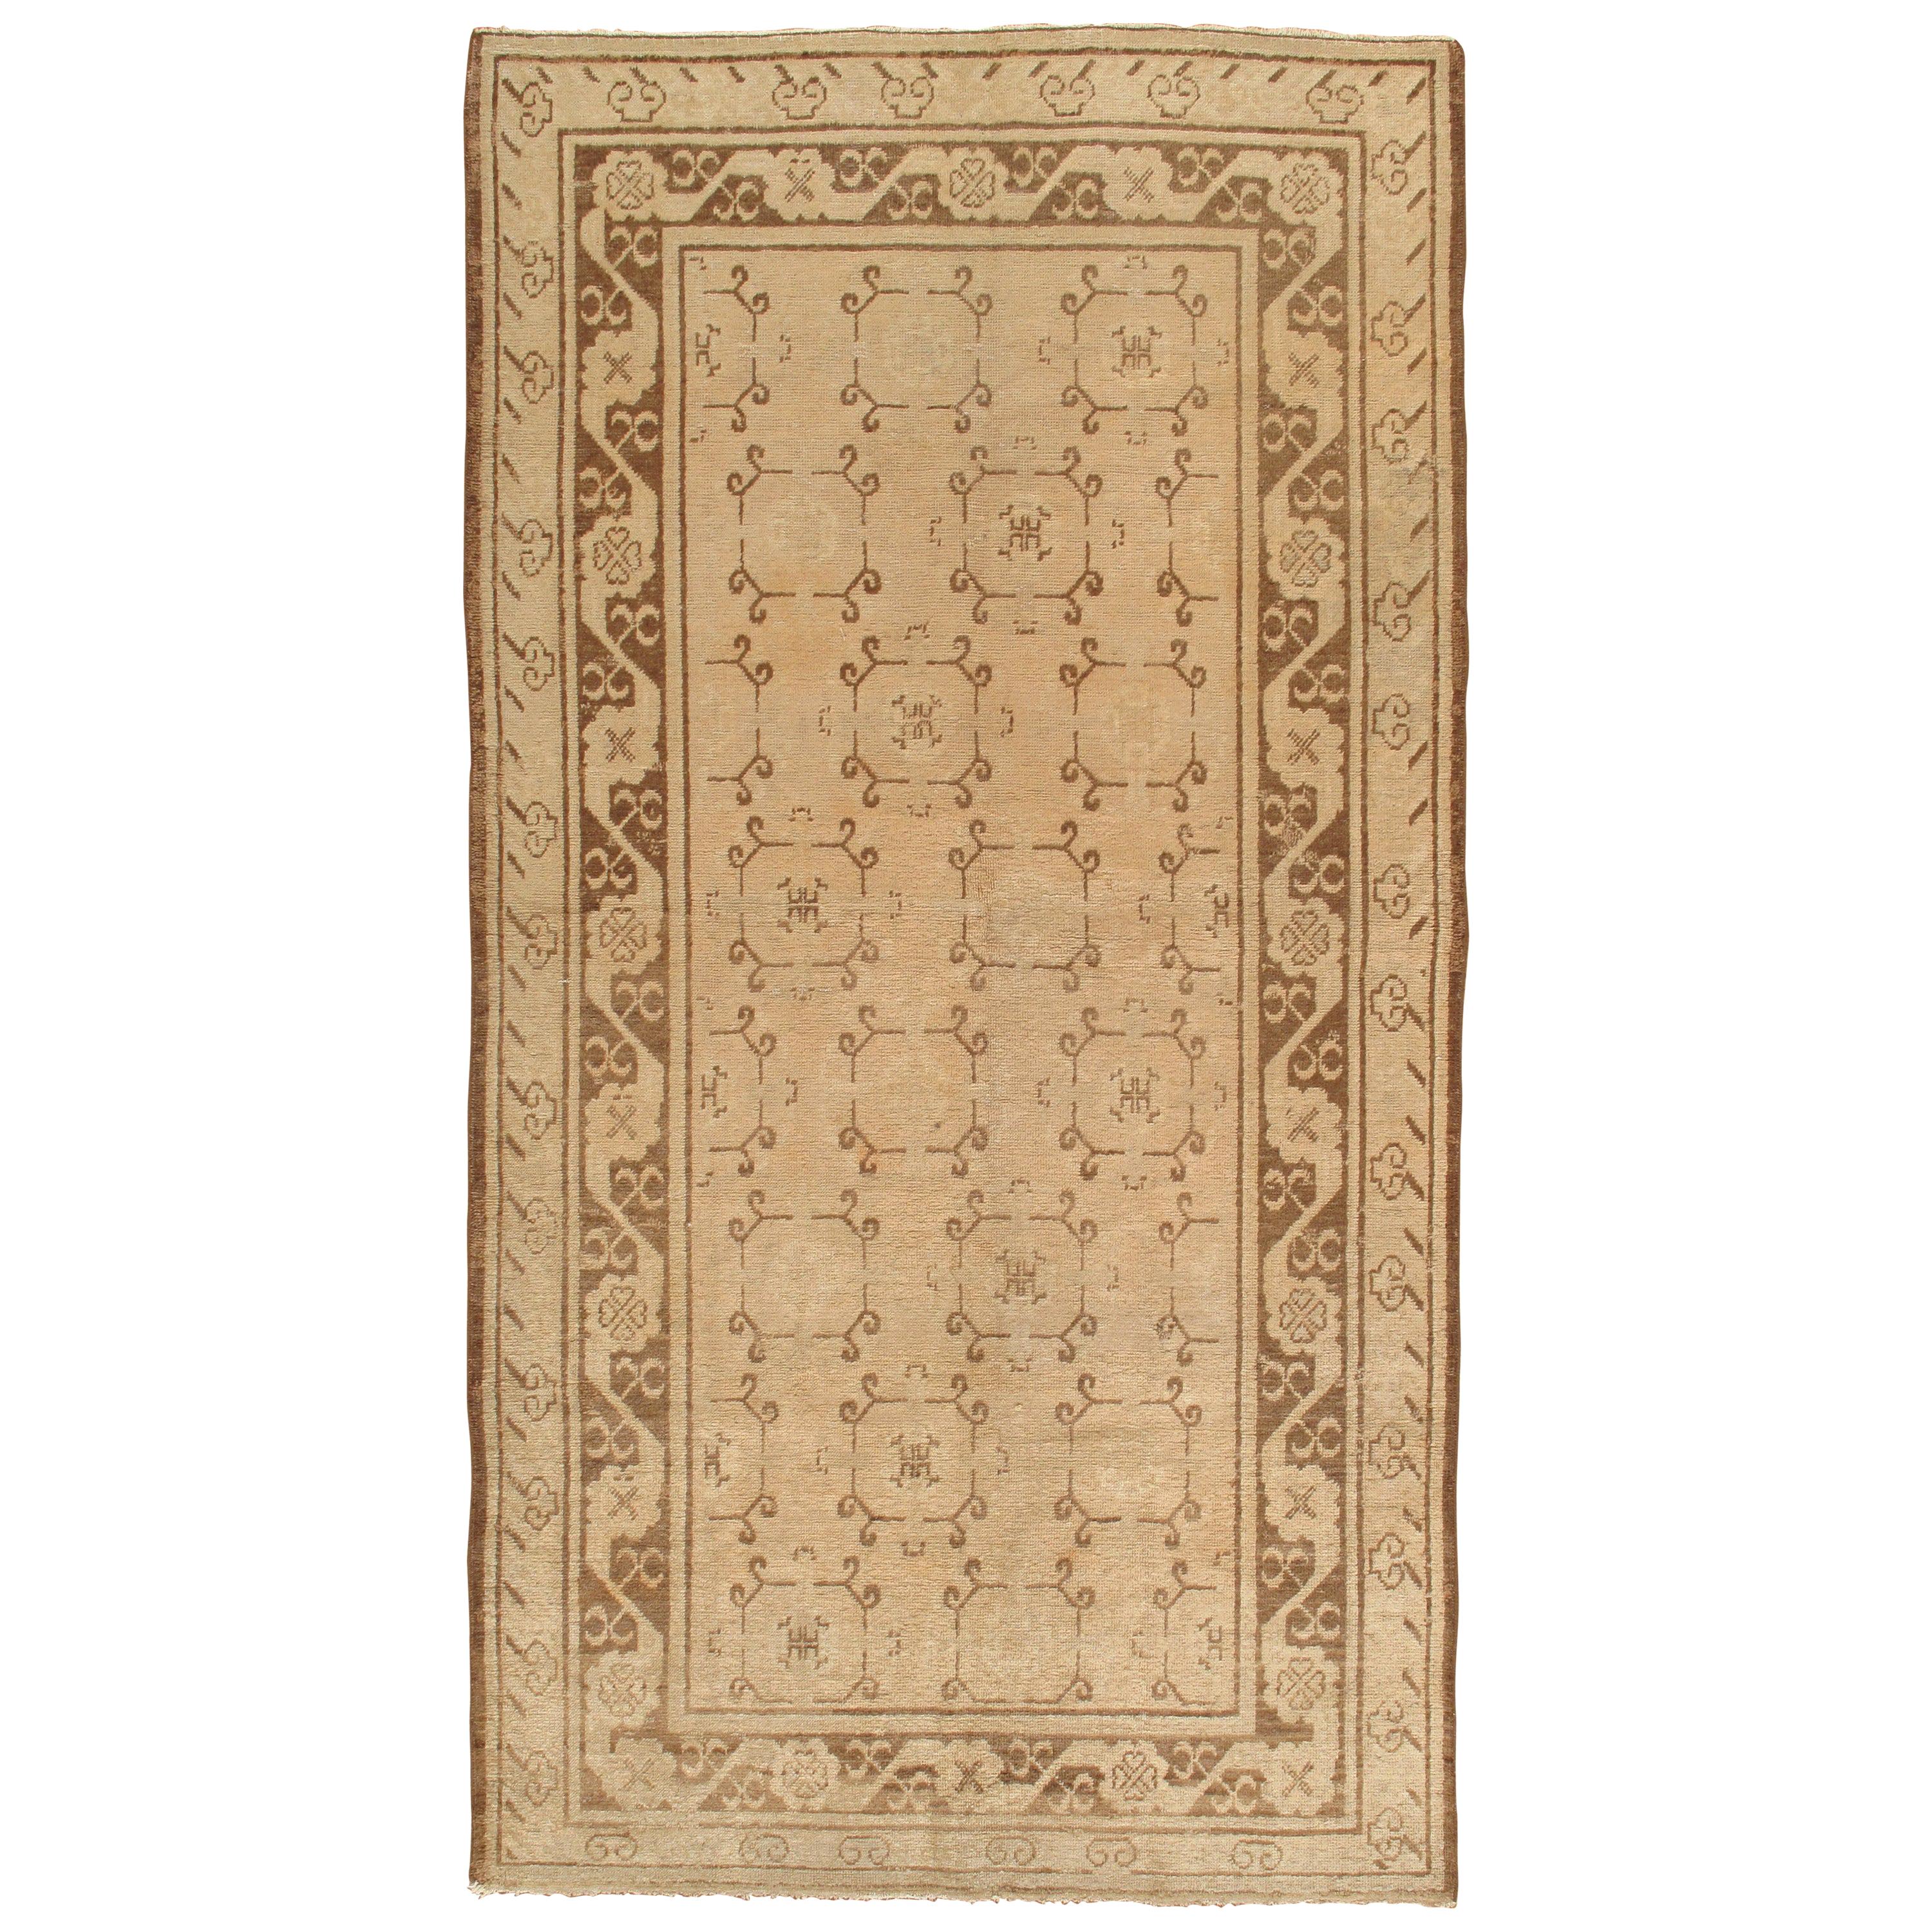 Antiker Khotan Teppich, Deco Handmade Oriental Rug, Brown and Pink Rug